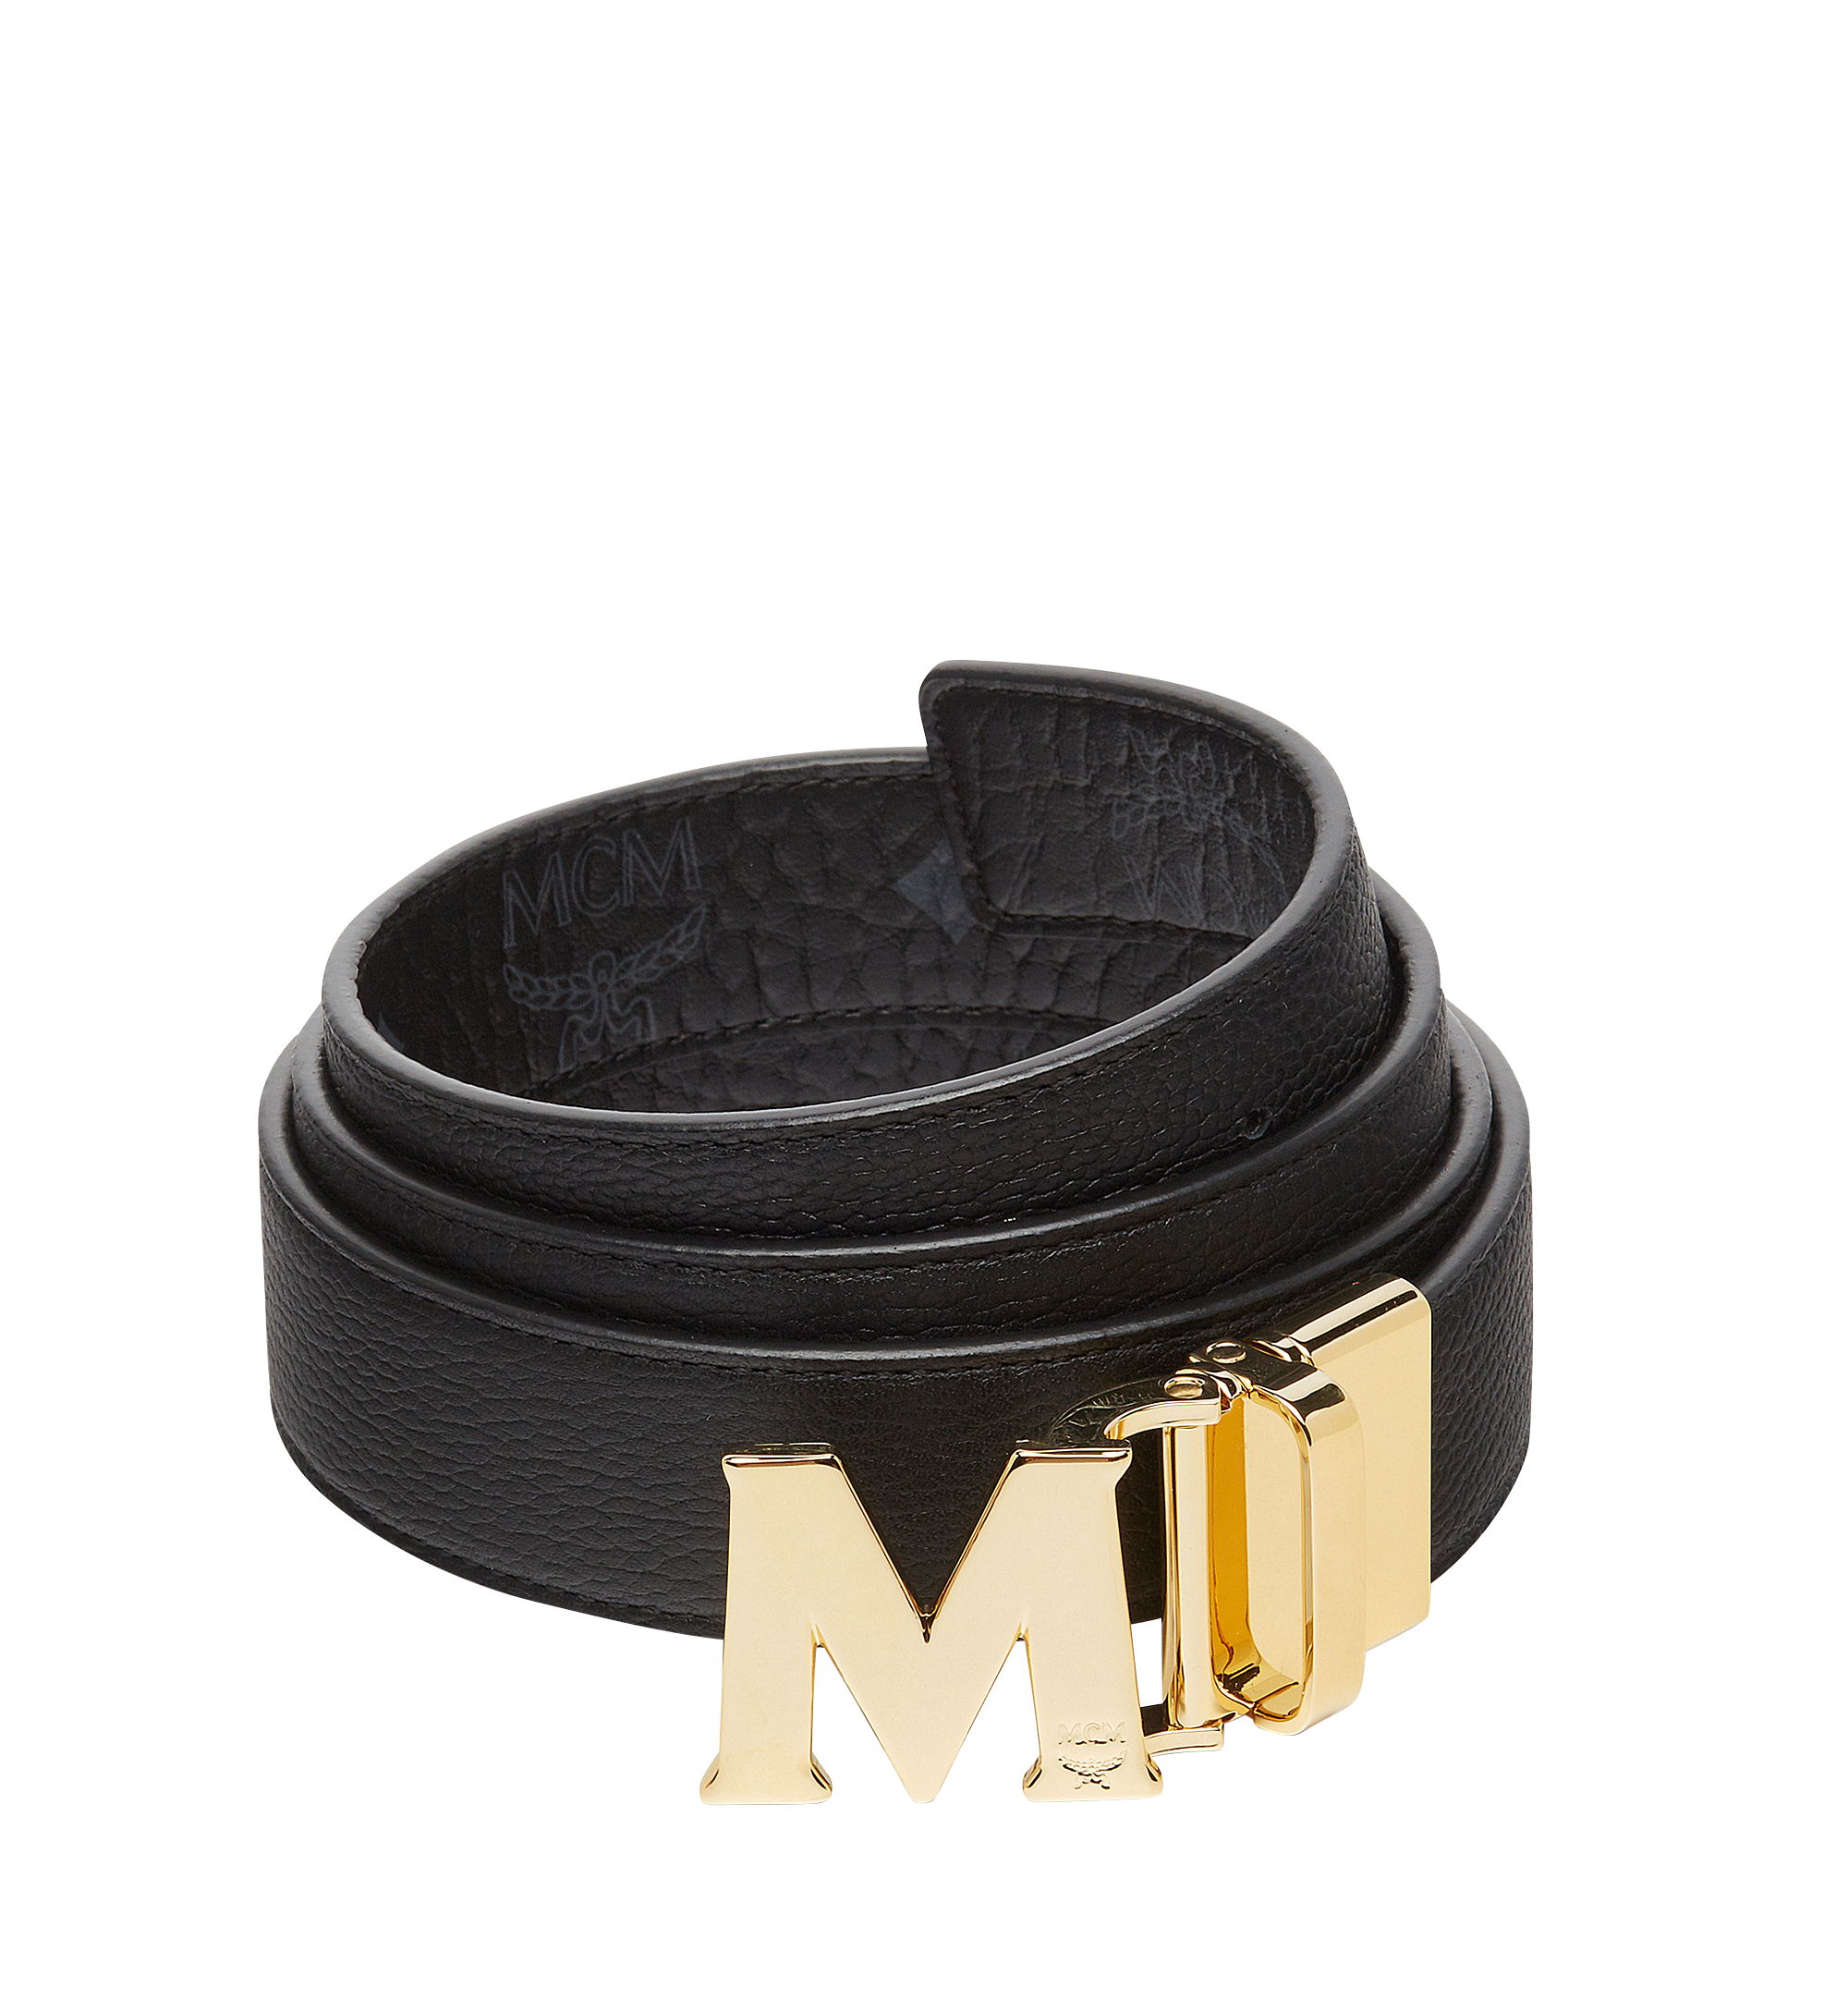 MCM Claus M Reversible Belt 3 cm in Visetos Black MYB7SVC09BK001 Alternate View 1